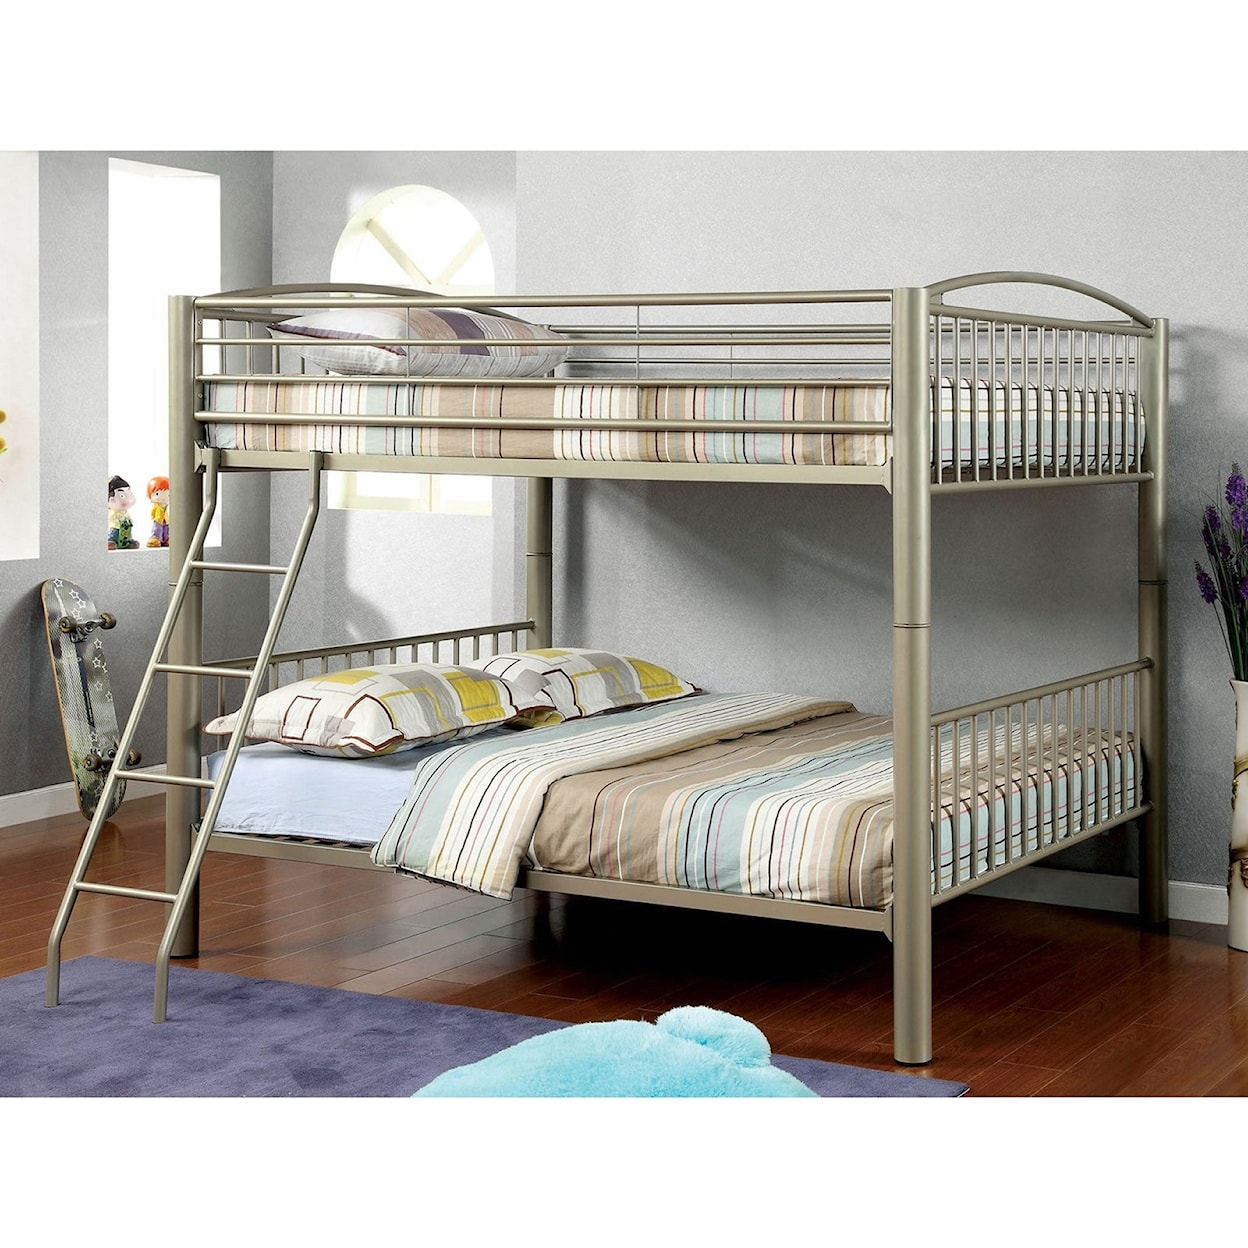 Furniture of America Lovia Full/Full Bunk Bed